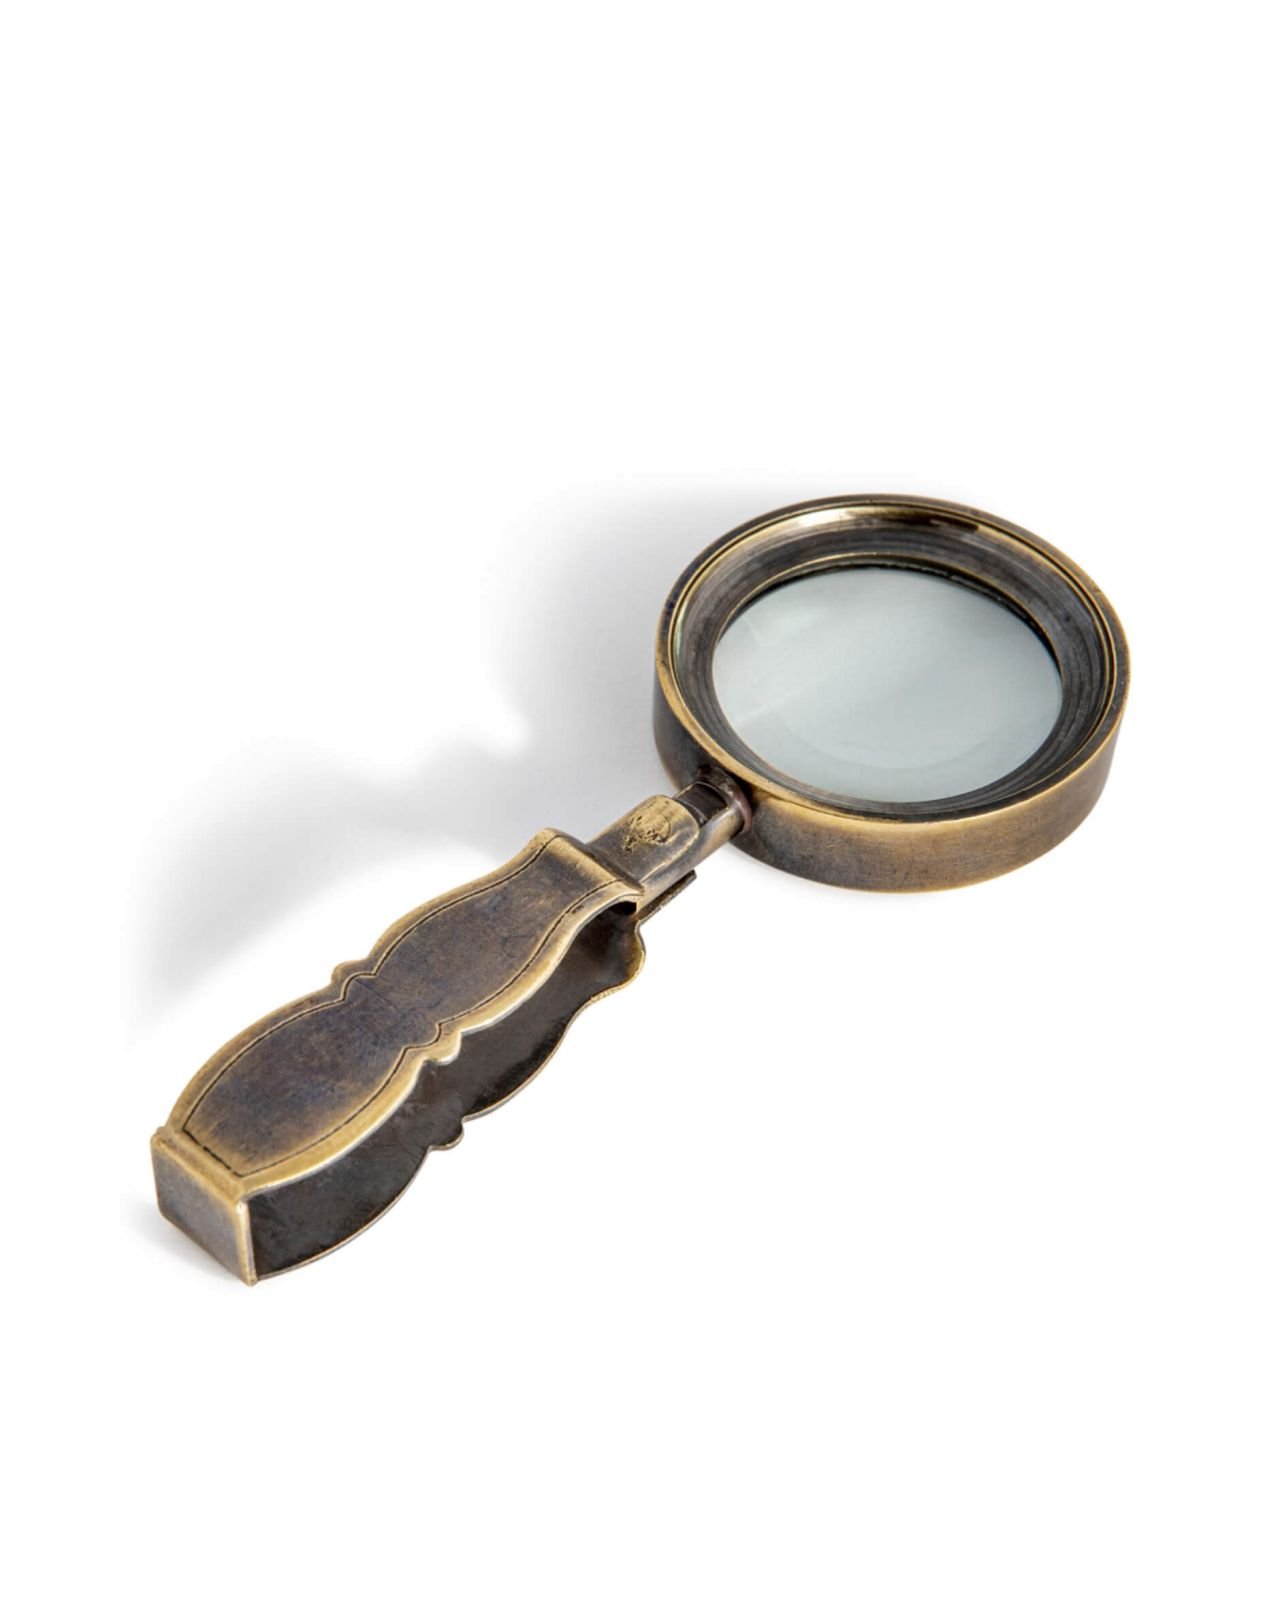 Vintage travel magnifier bronze